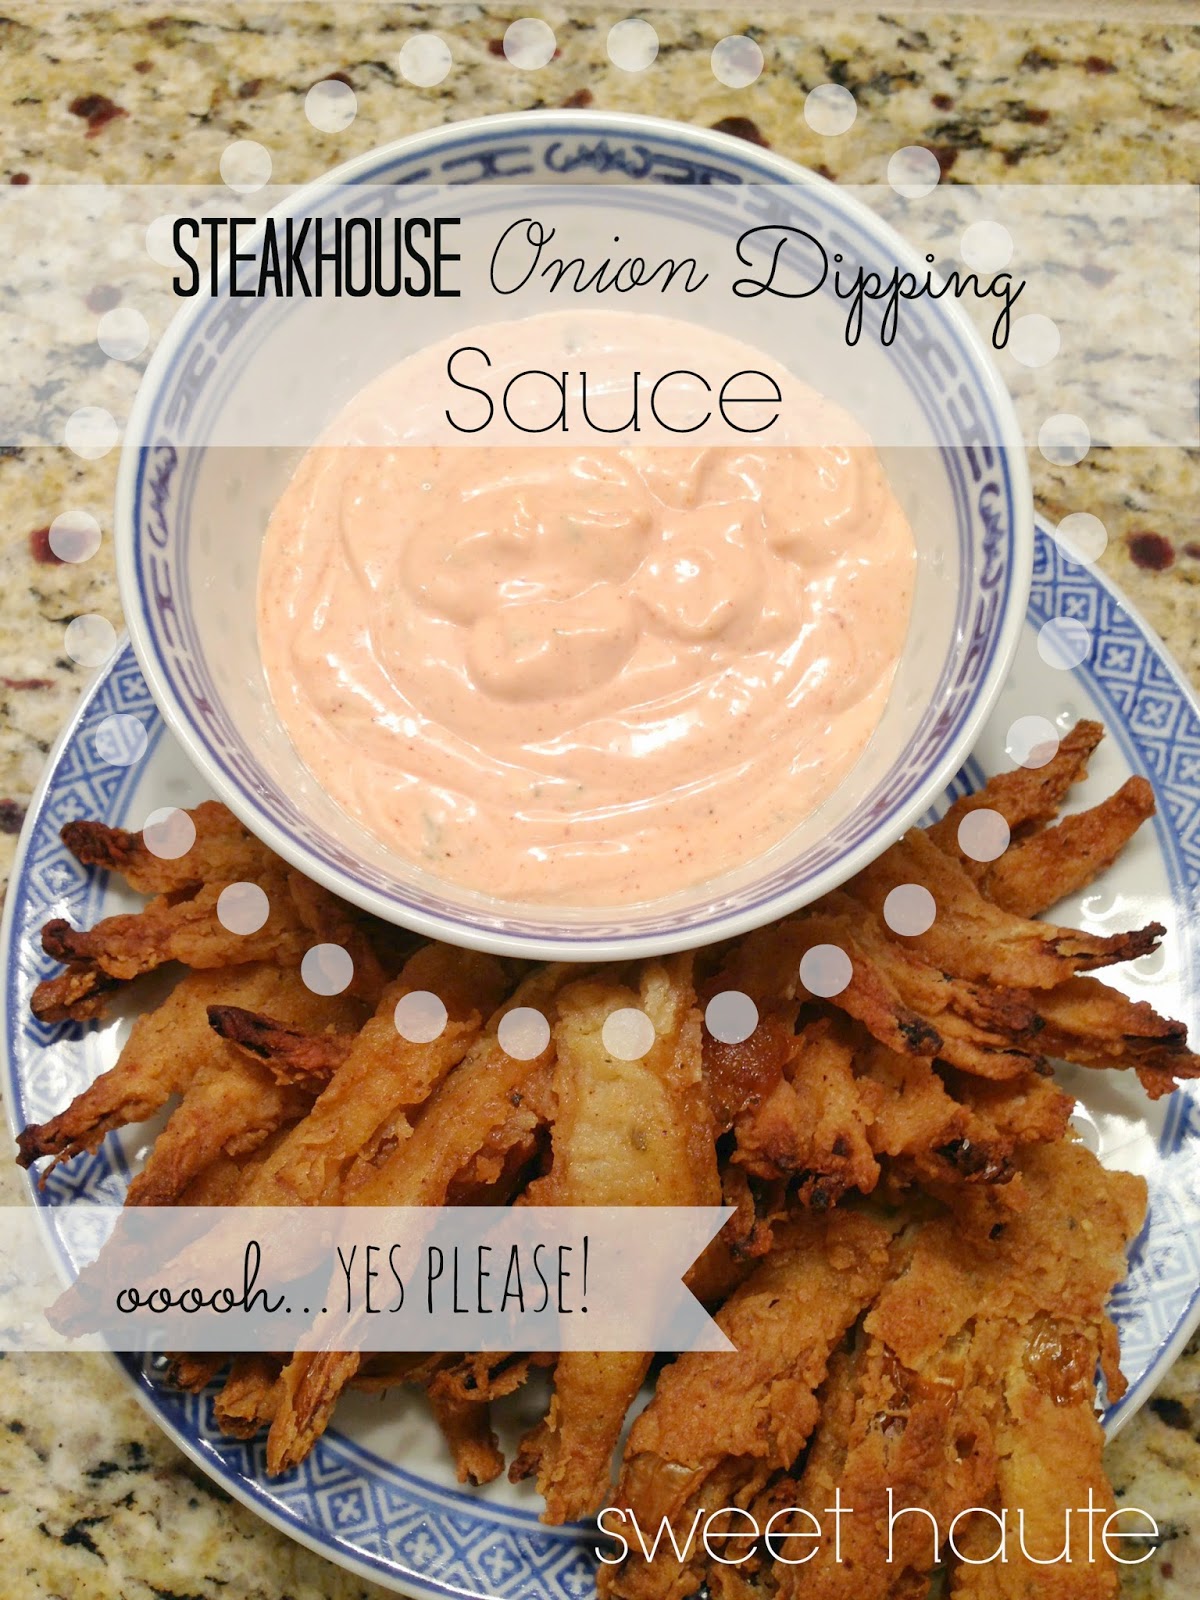 http://sweethaute.blogspot.com/2014/03/steakhouse-onion-dipping-sauce-tutorial.html